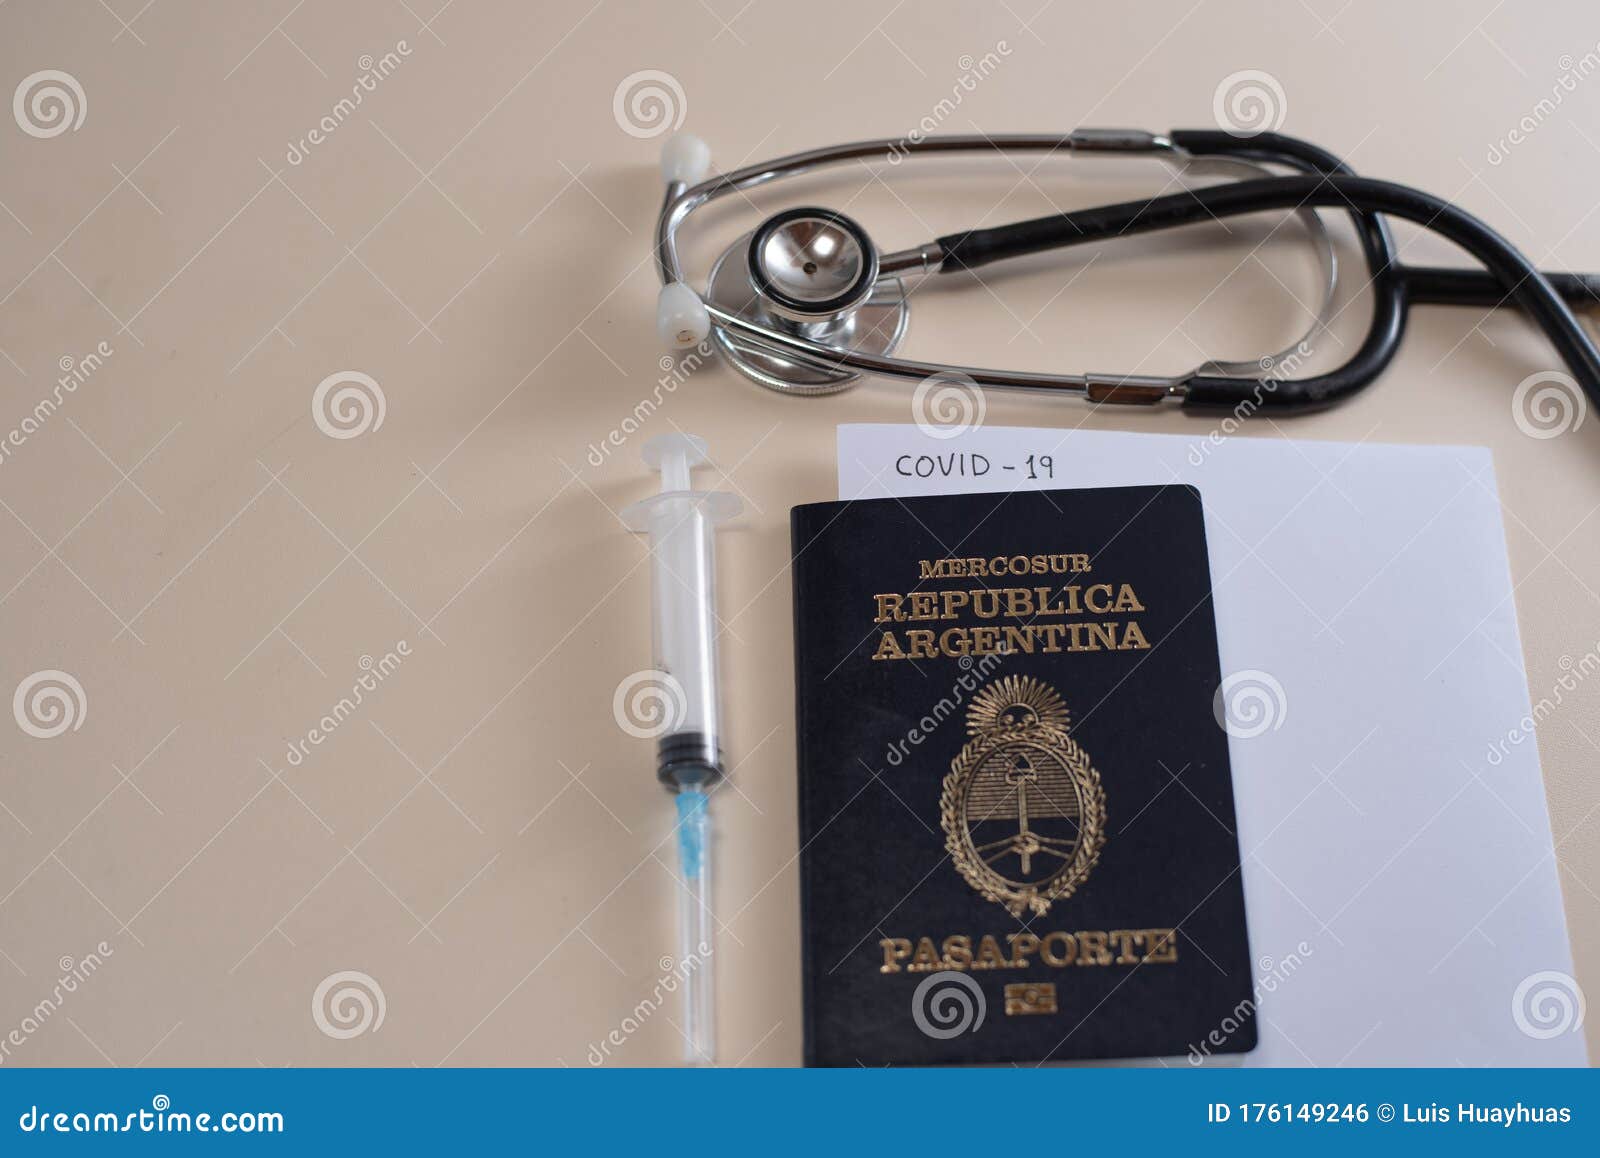 passport on background, health and prevention coronavirus, medicine, migration